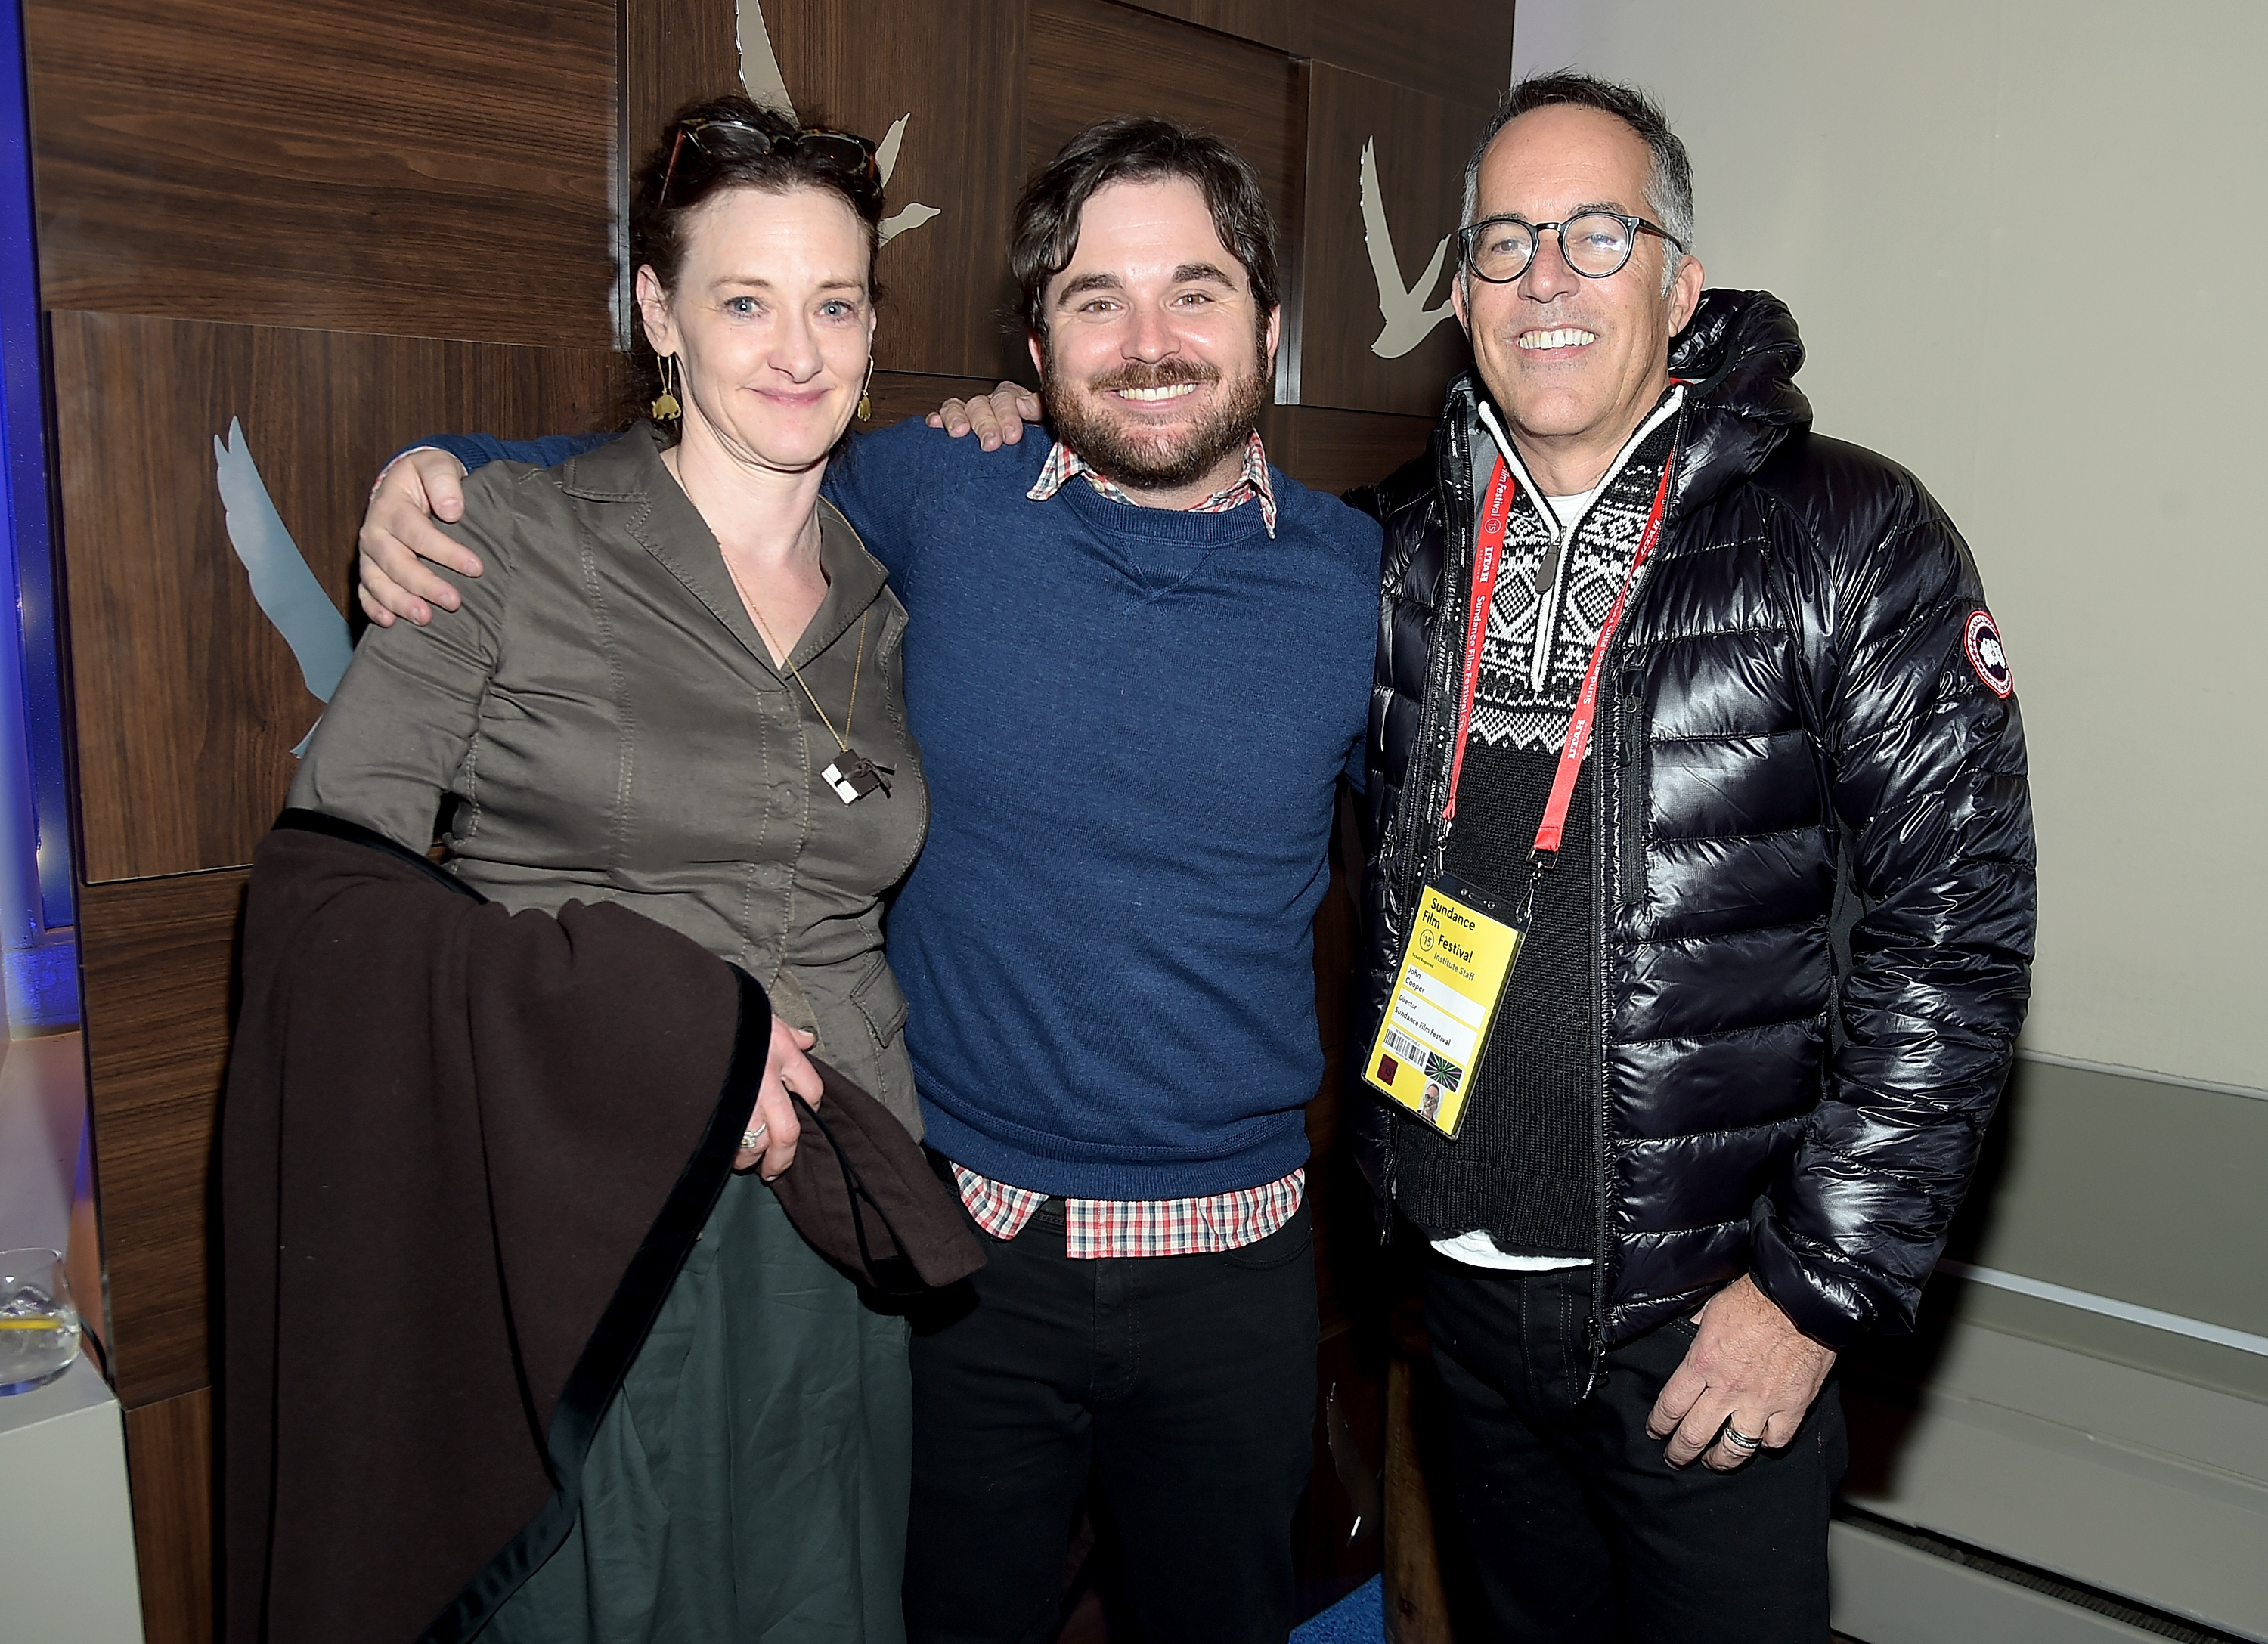 Joan Cusack, James Ponsoldt and Sundance Film Festival John Cooper attend GREY GOOSE Blue Door Hosts "The End of Tour" Party